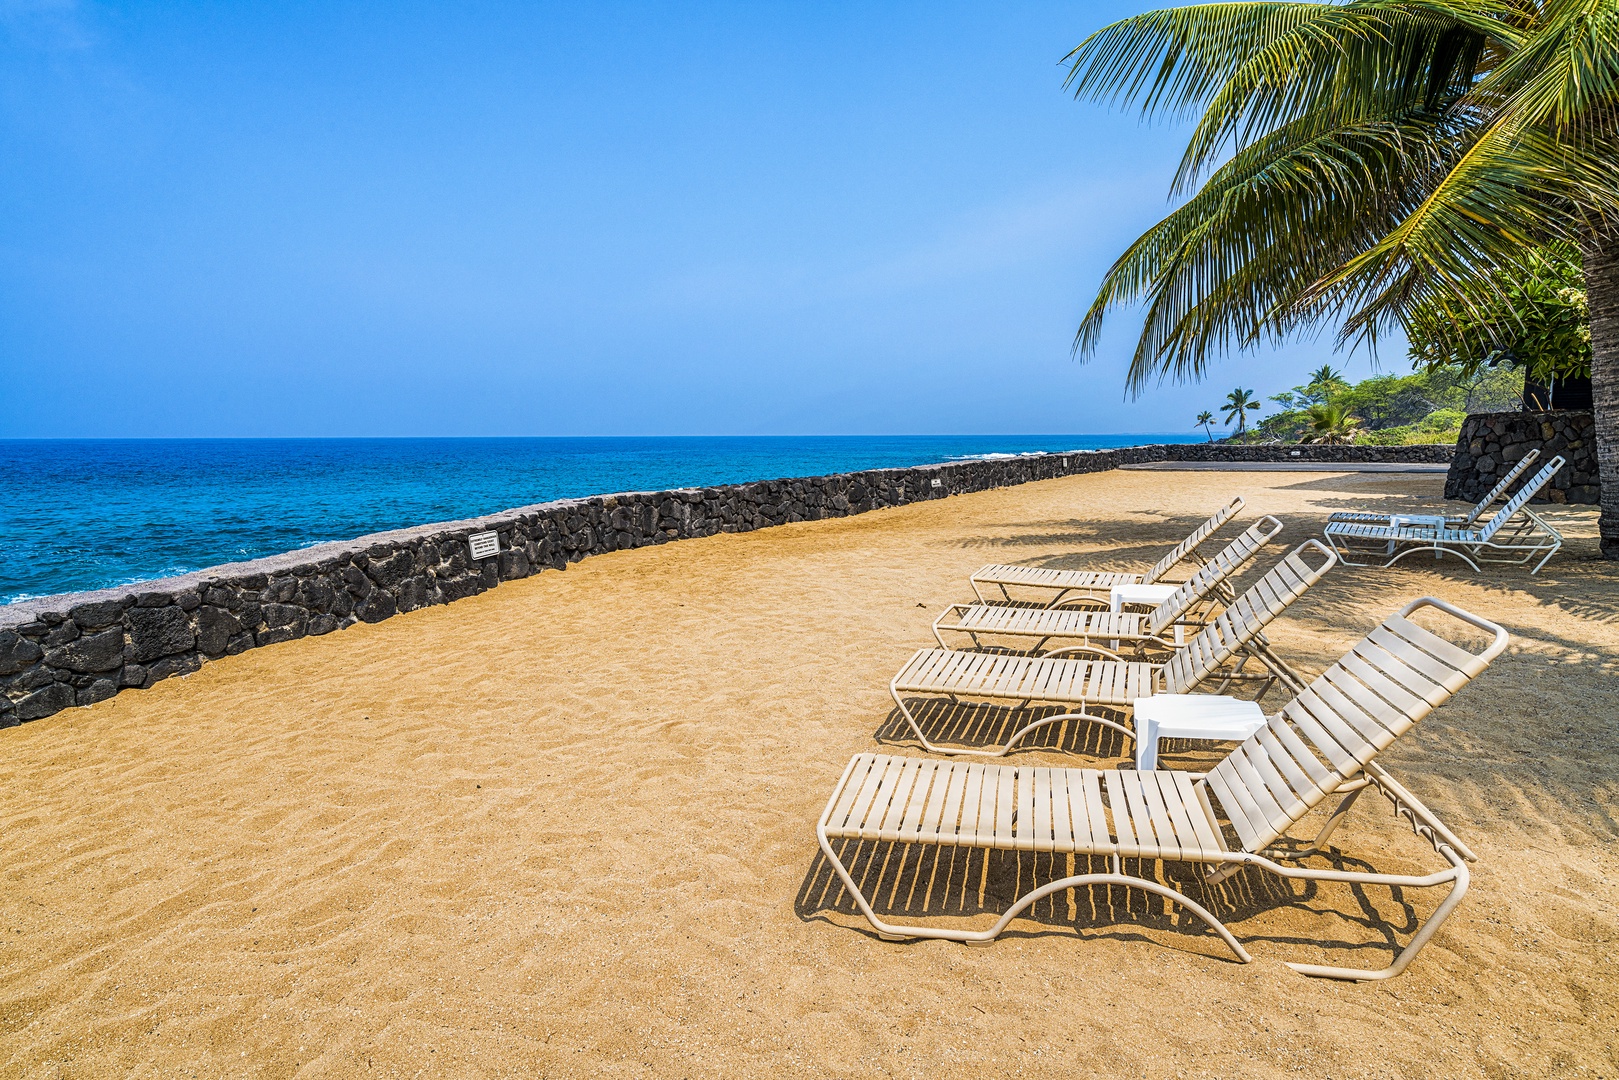 Kailua Kona Vacation Rentals, Casa De Emdeko 222 - No better place to work on your tan!